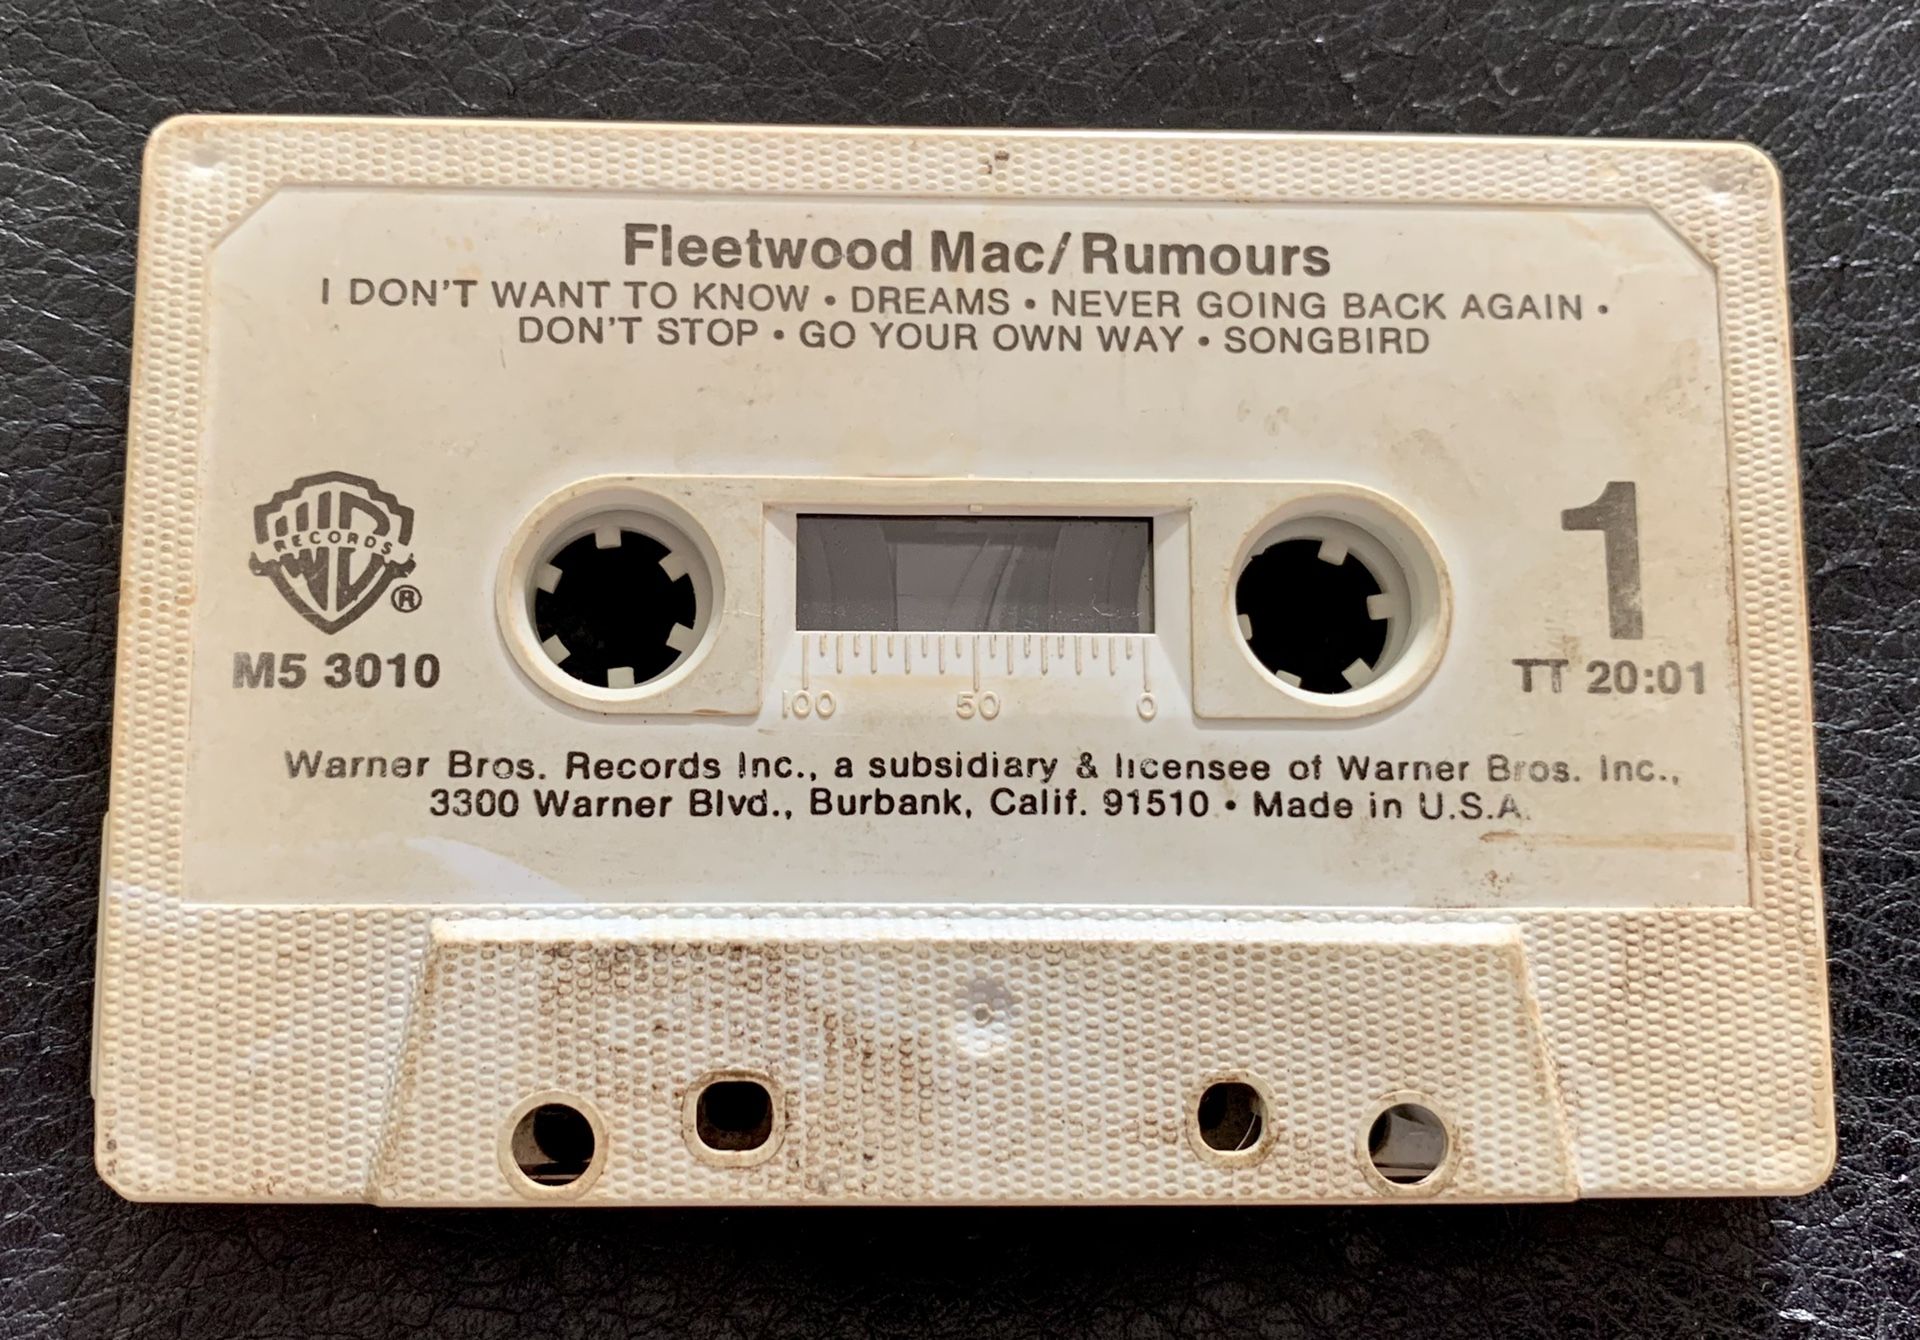 Fleet wood Mac Rumors Music Cassette